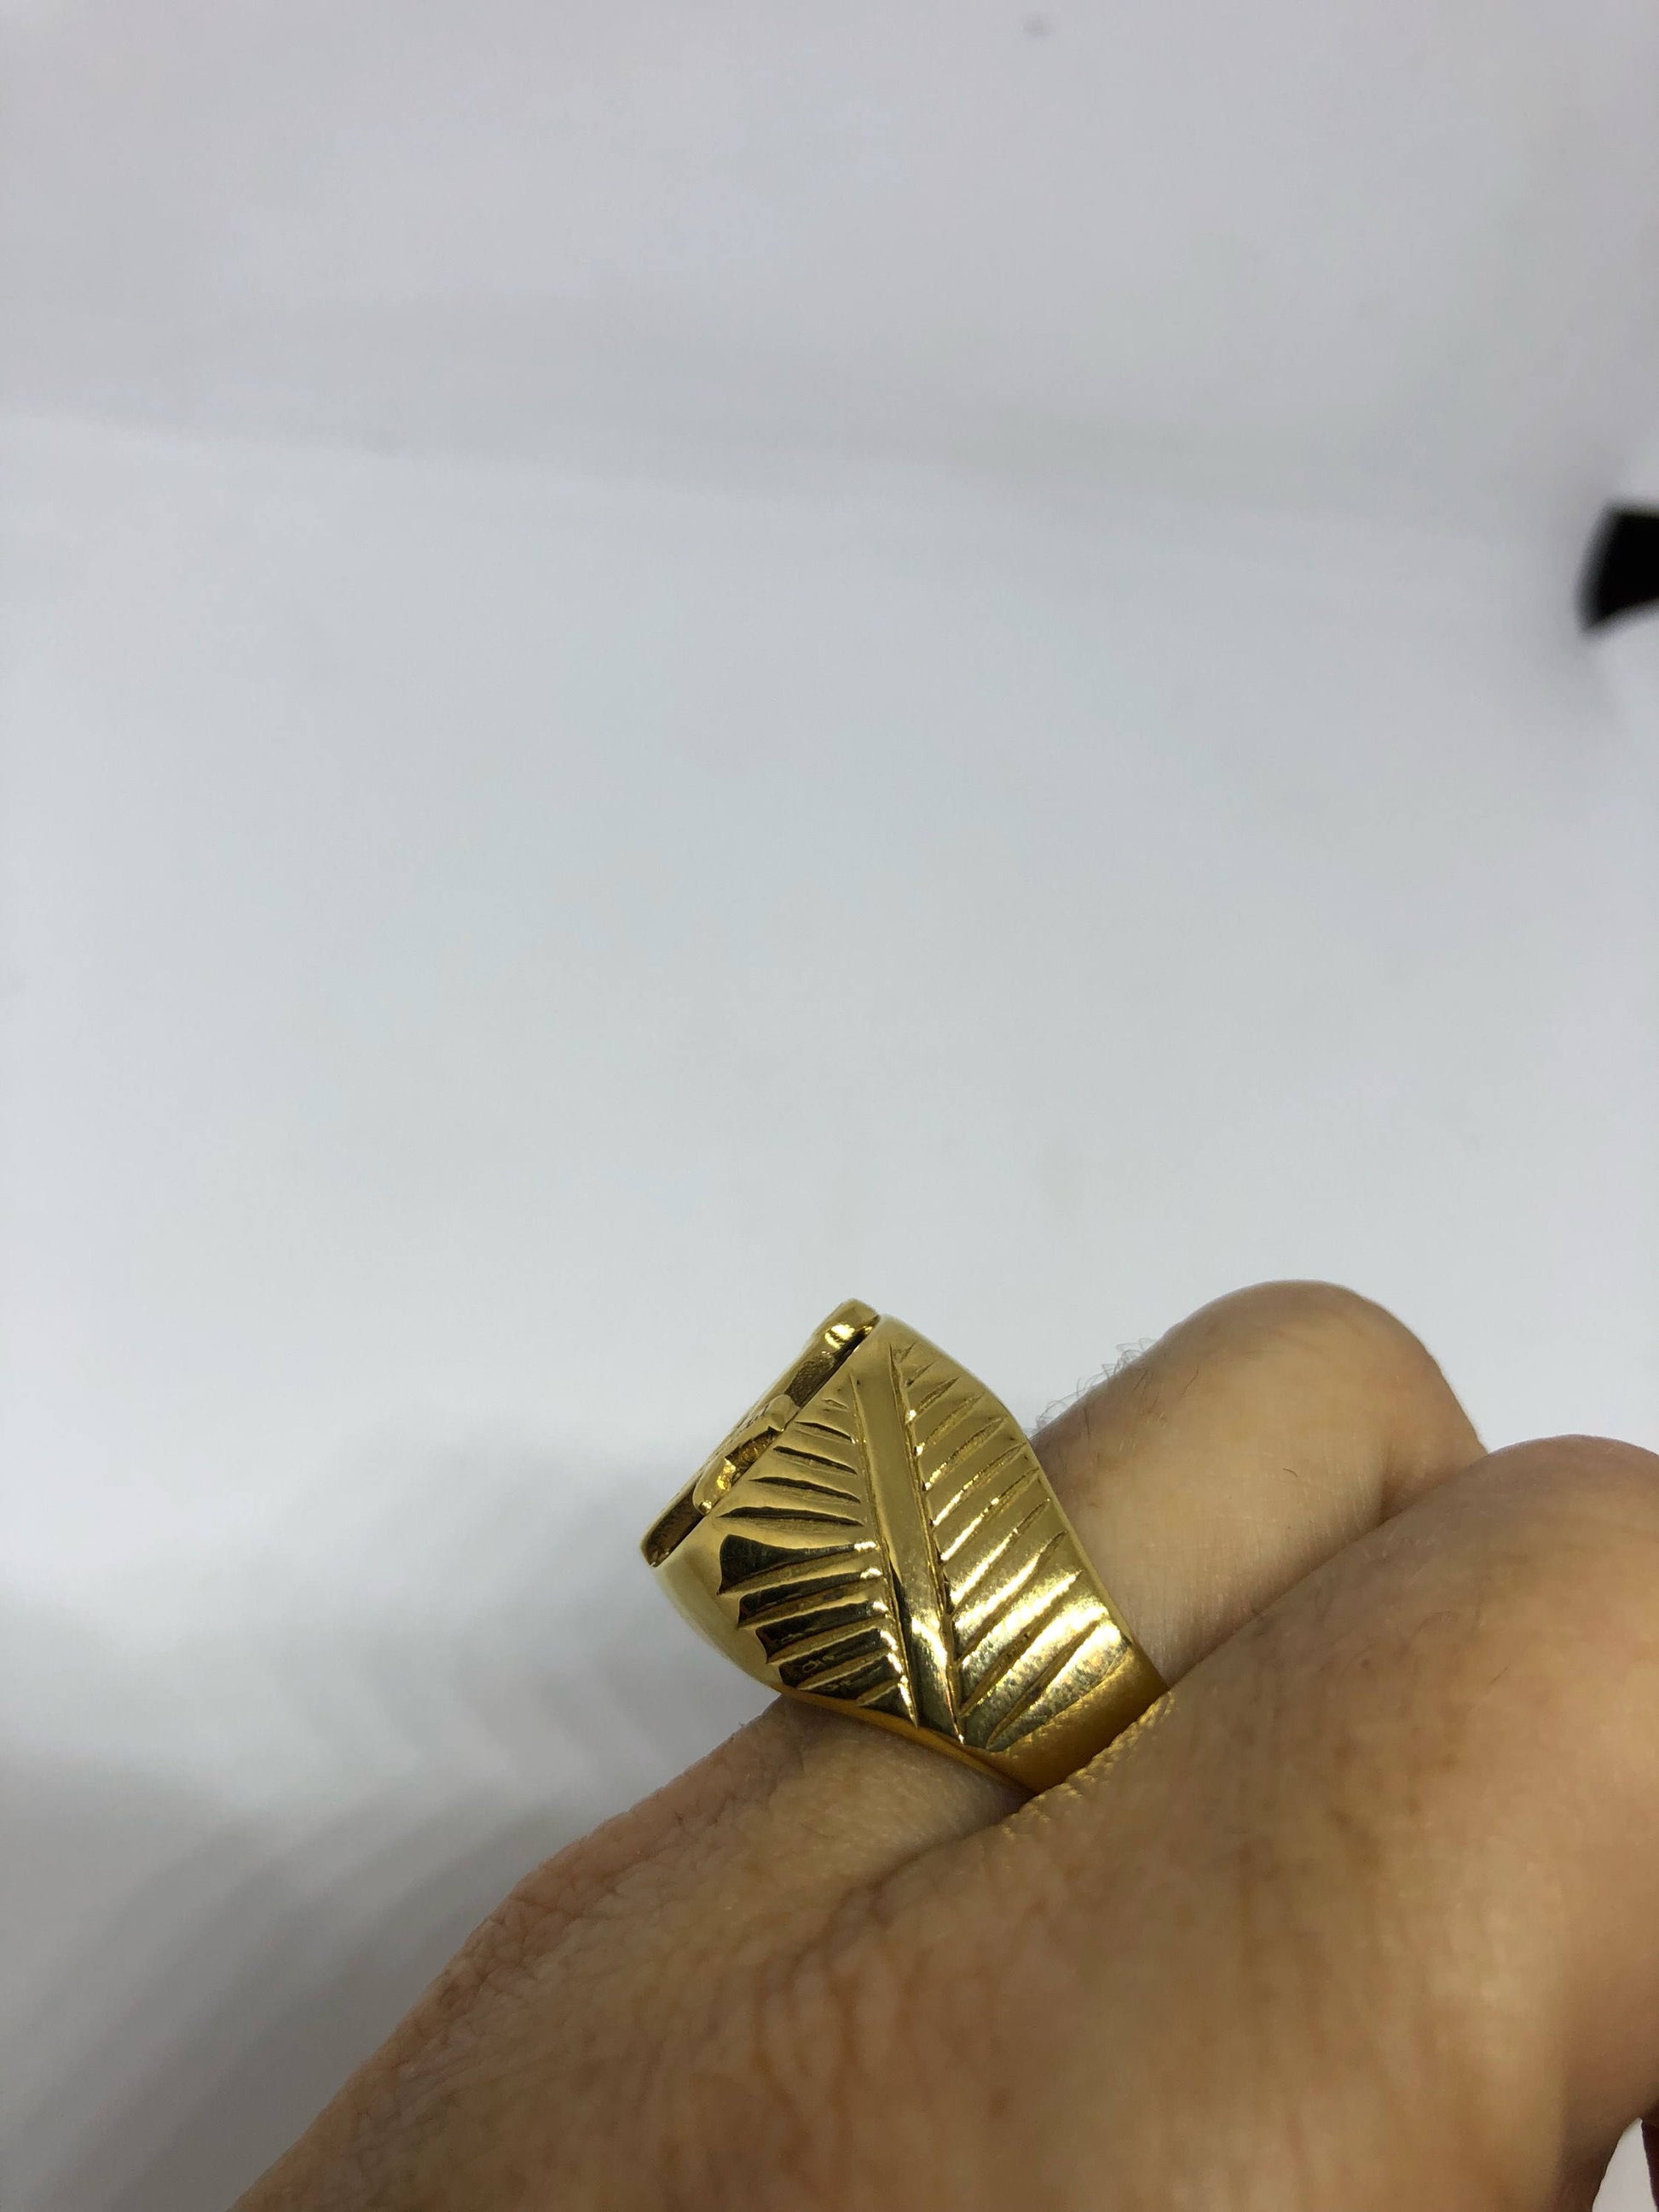 Vintage Gothic Gold Stainless Steel Genuine Black Onyx Free Mason Mens Ring